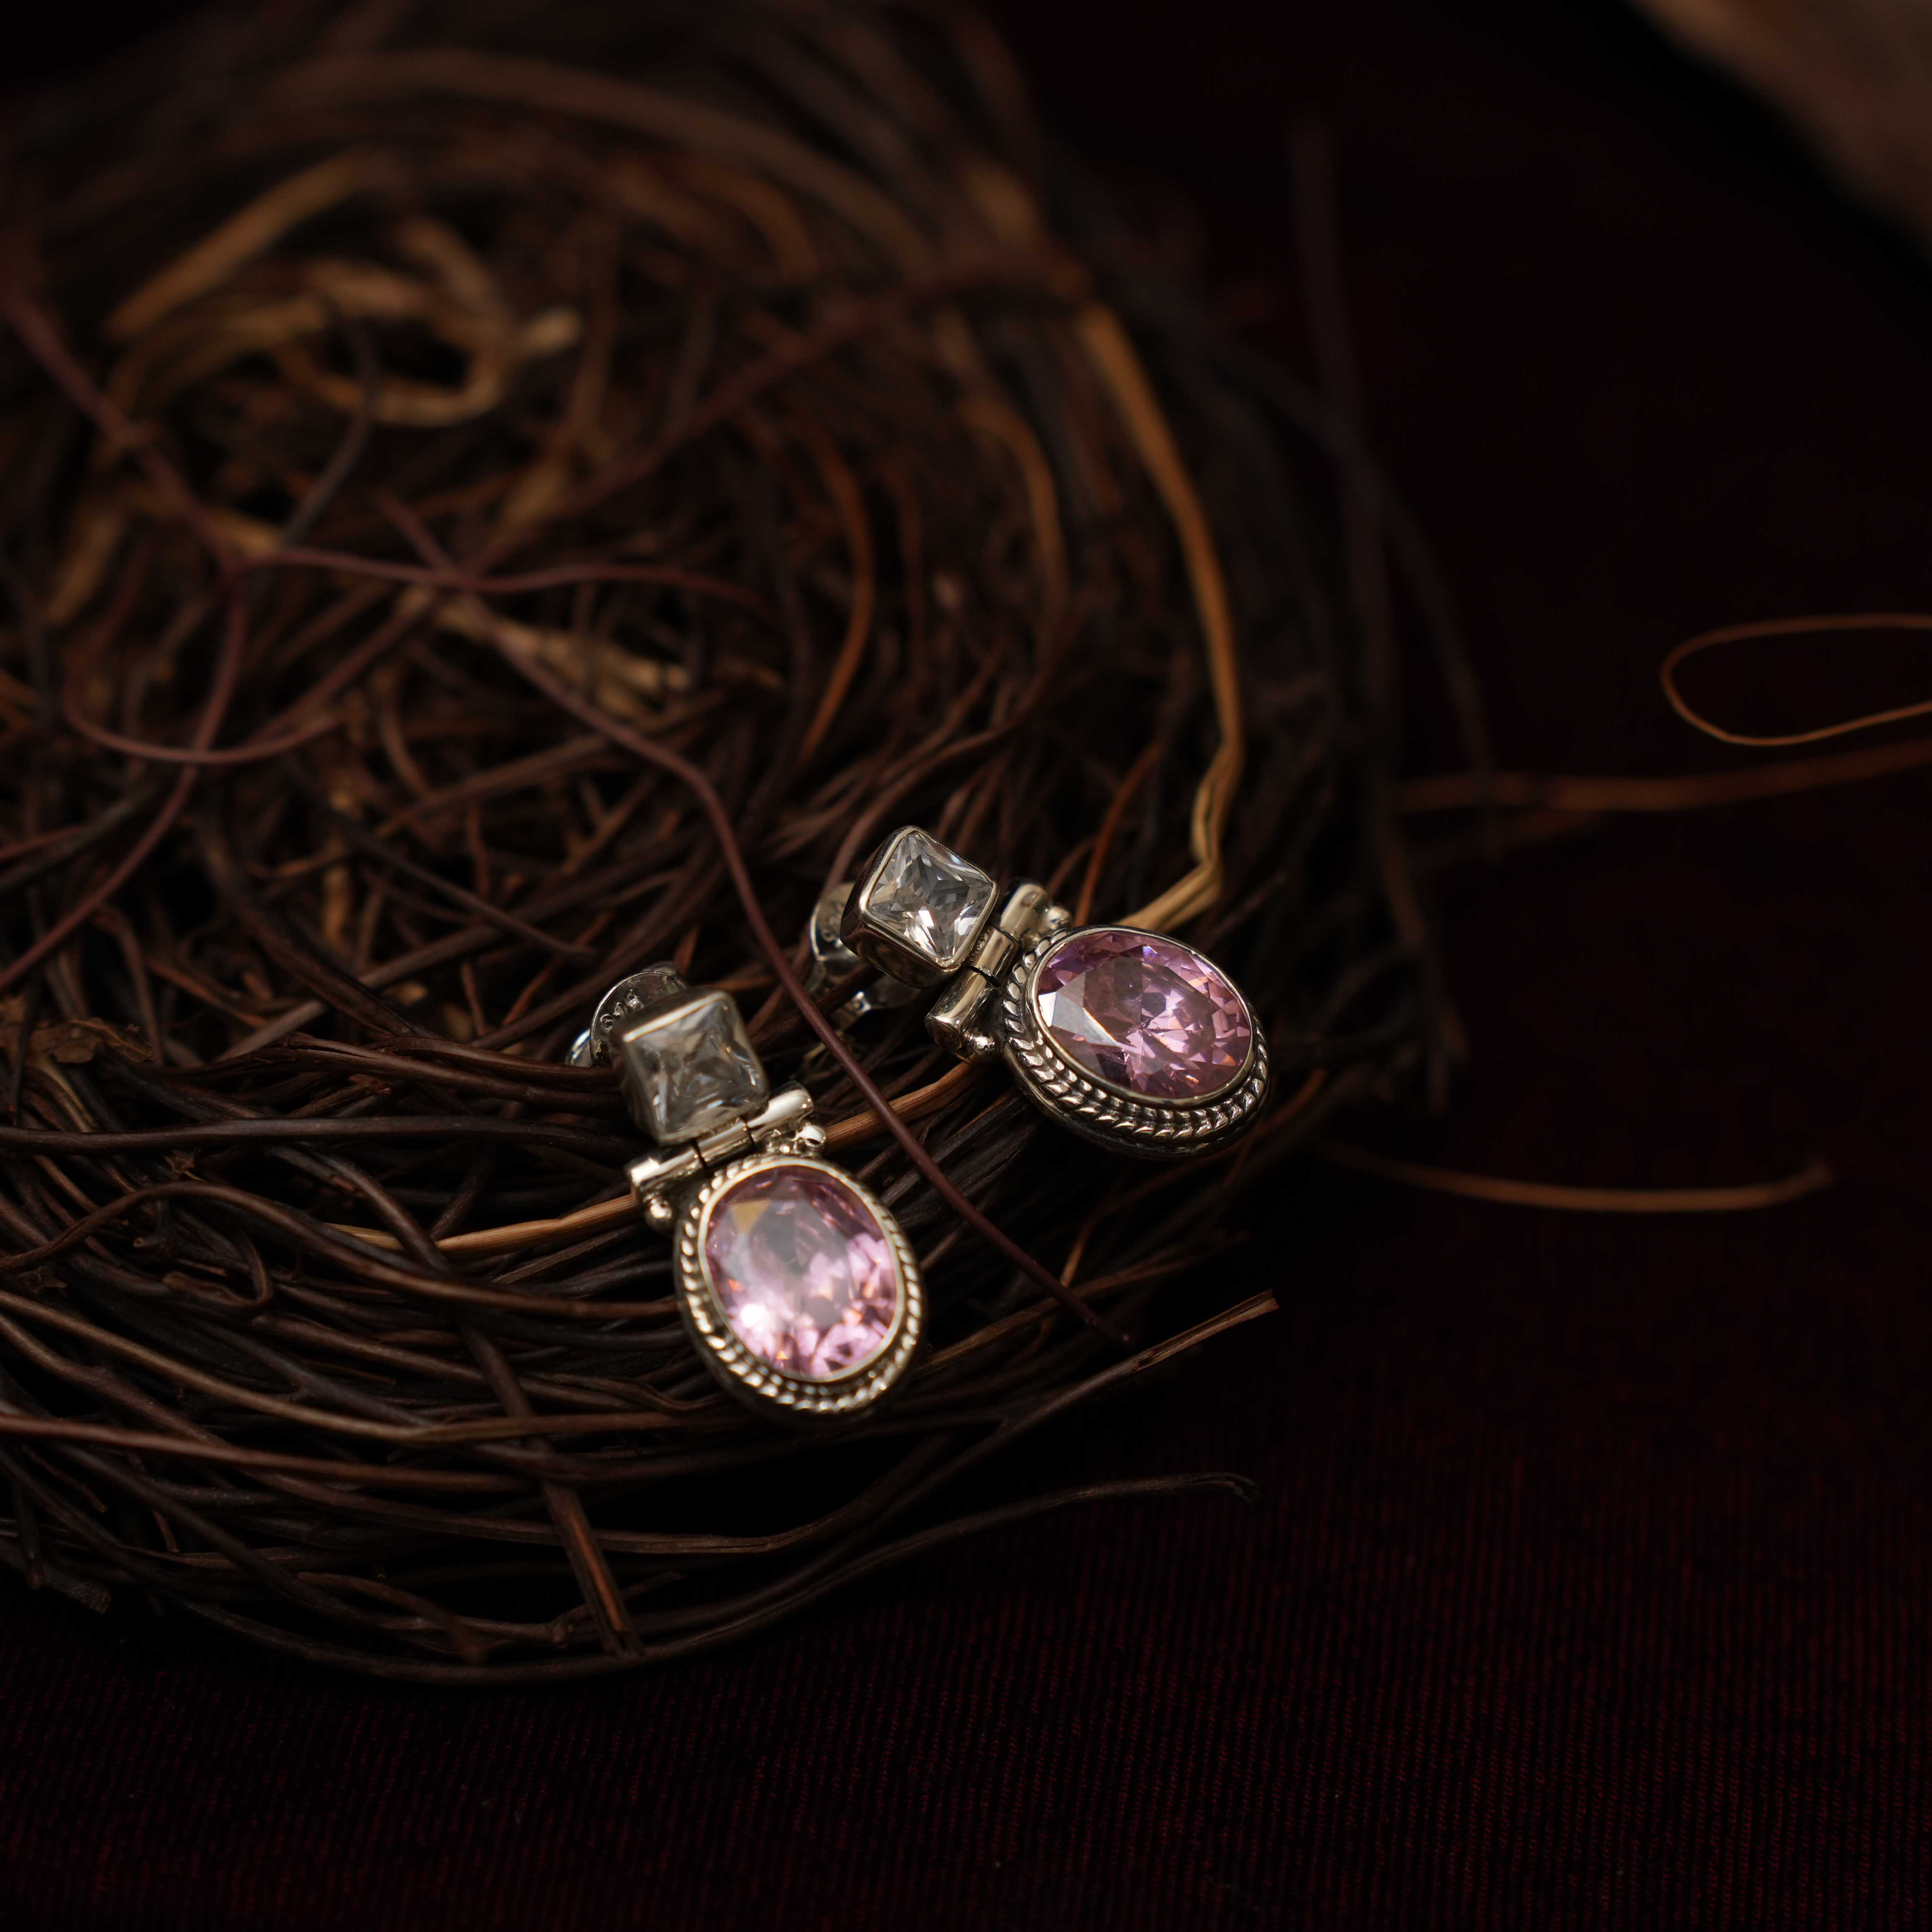 Radhi 925 Oxidized Silver Earrings - Pink